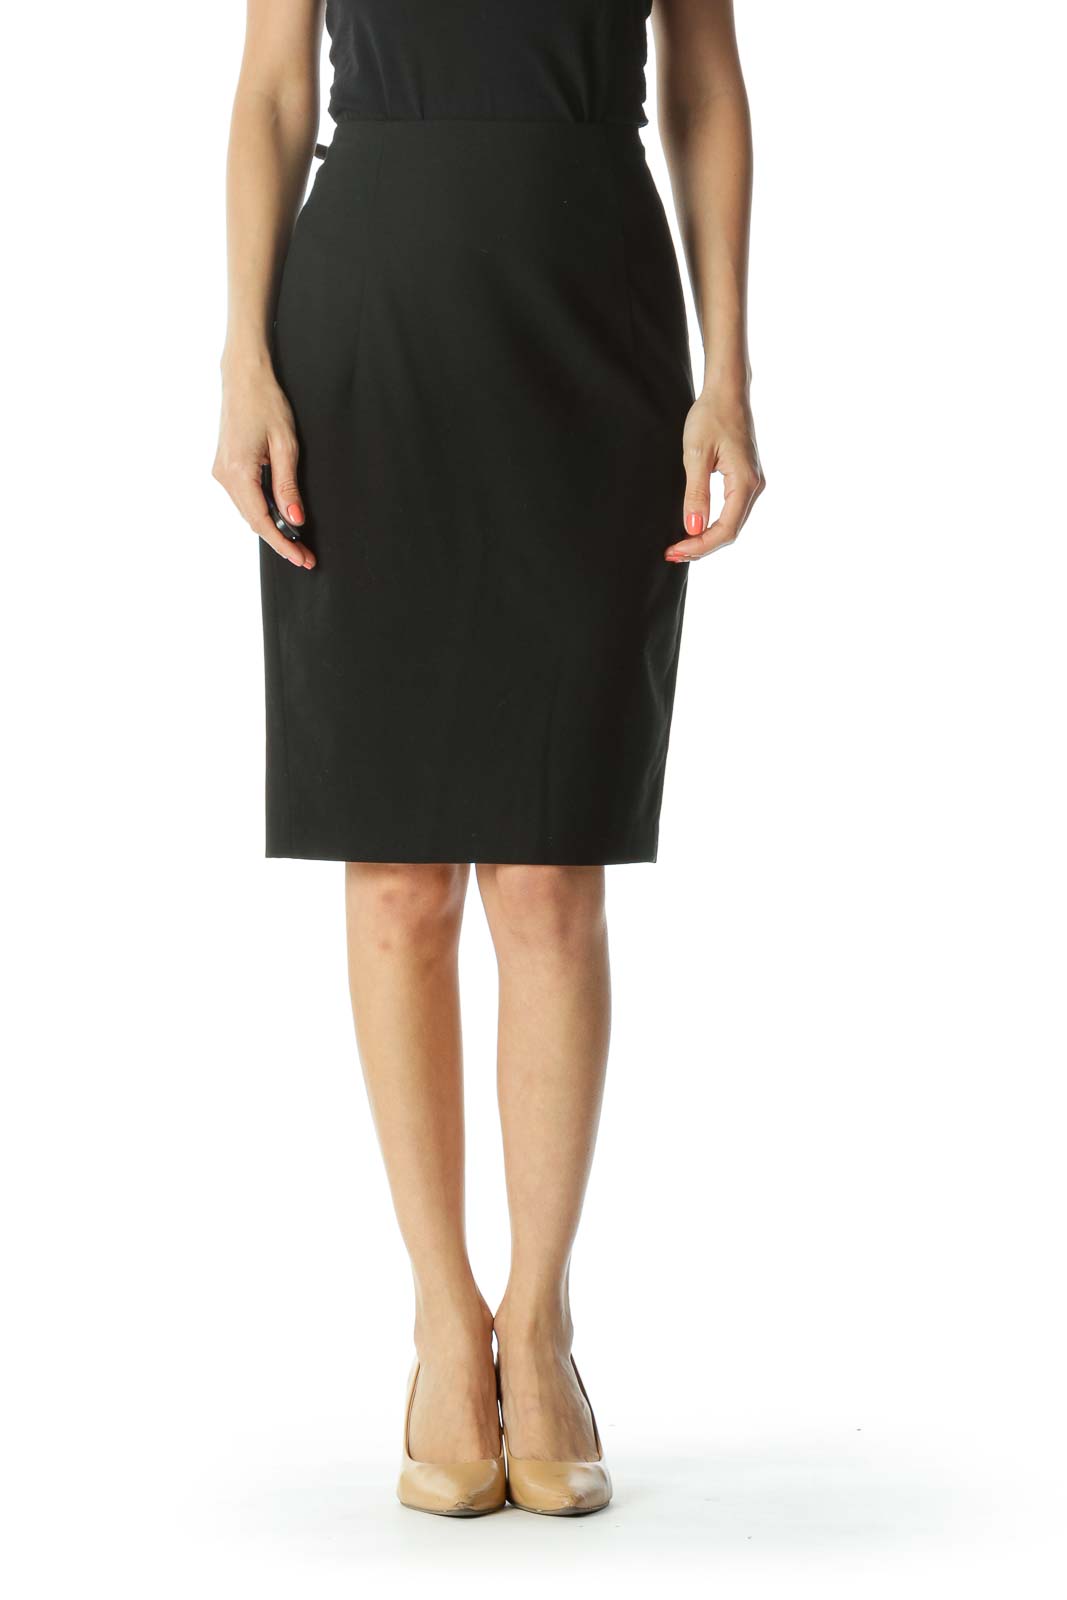 Black Back-Visible-Zipper-Detail Leg-Slit Pencil Skirt Front